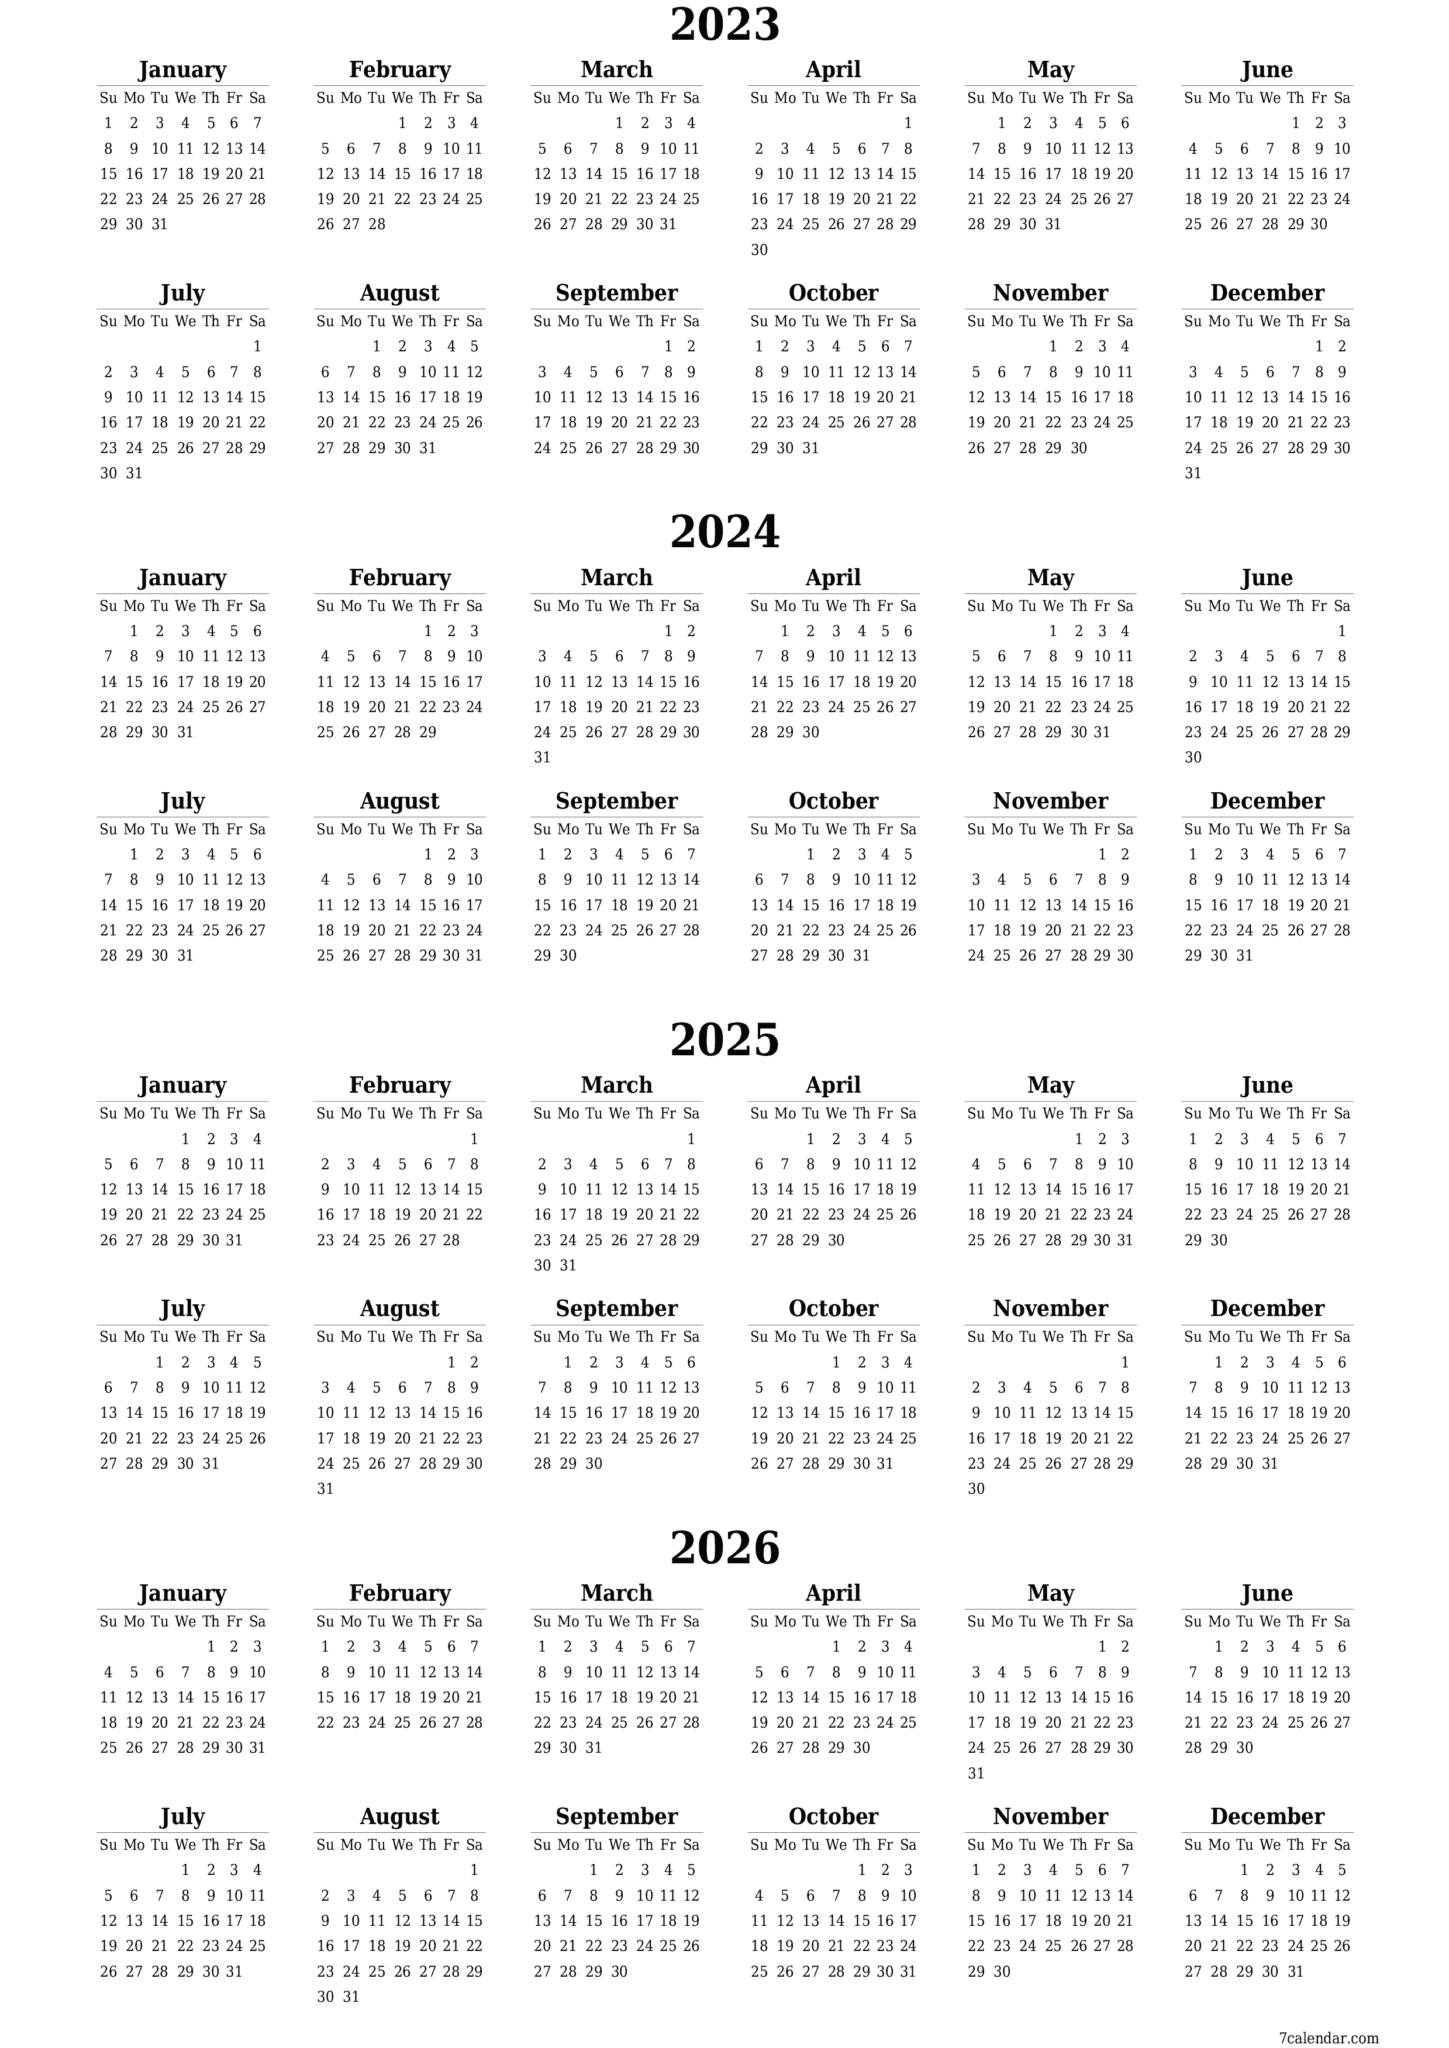 Free Printable ThreeYear Calendars Templates 2023/2024/2025